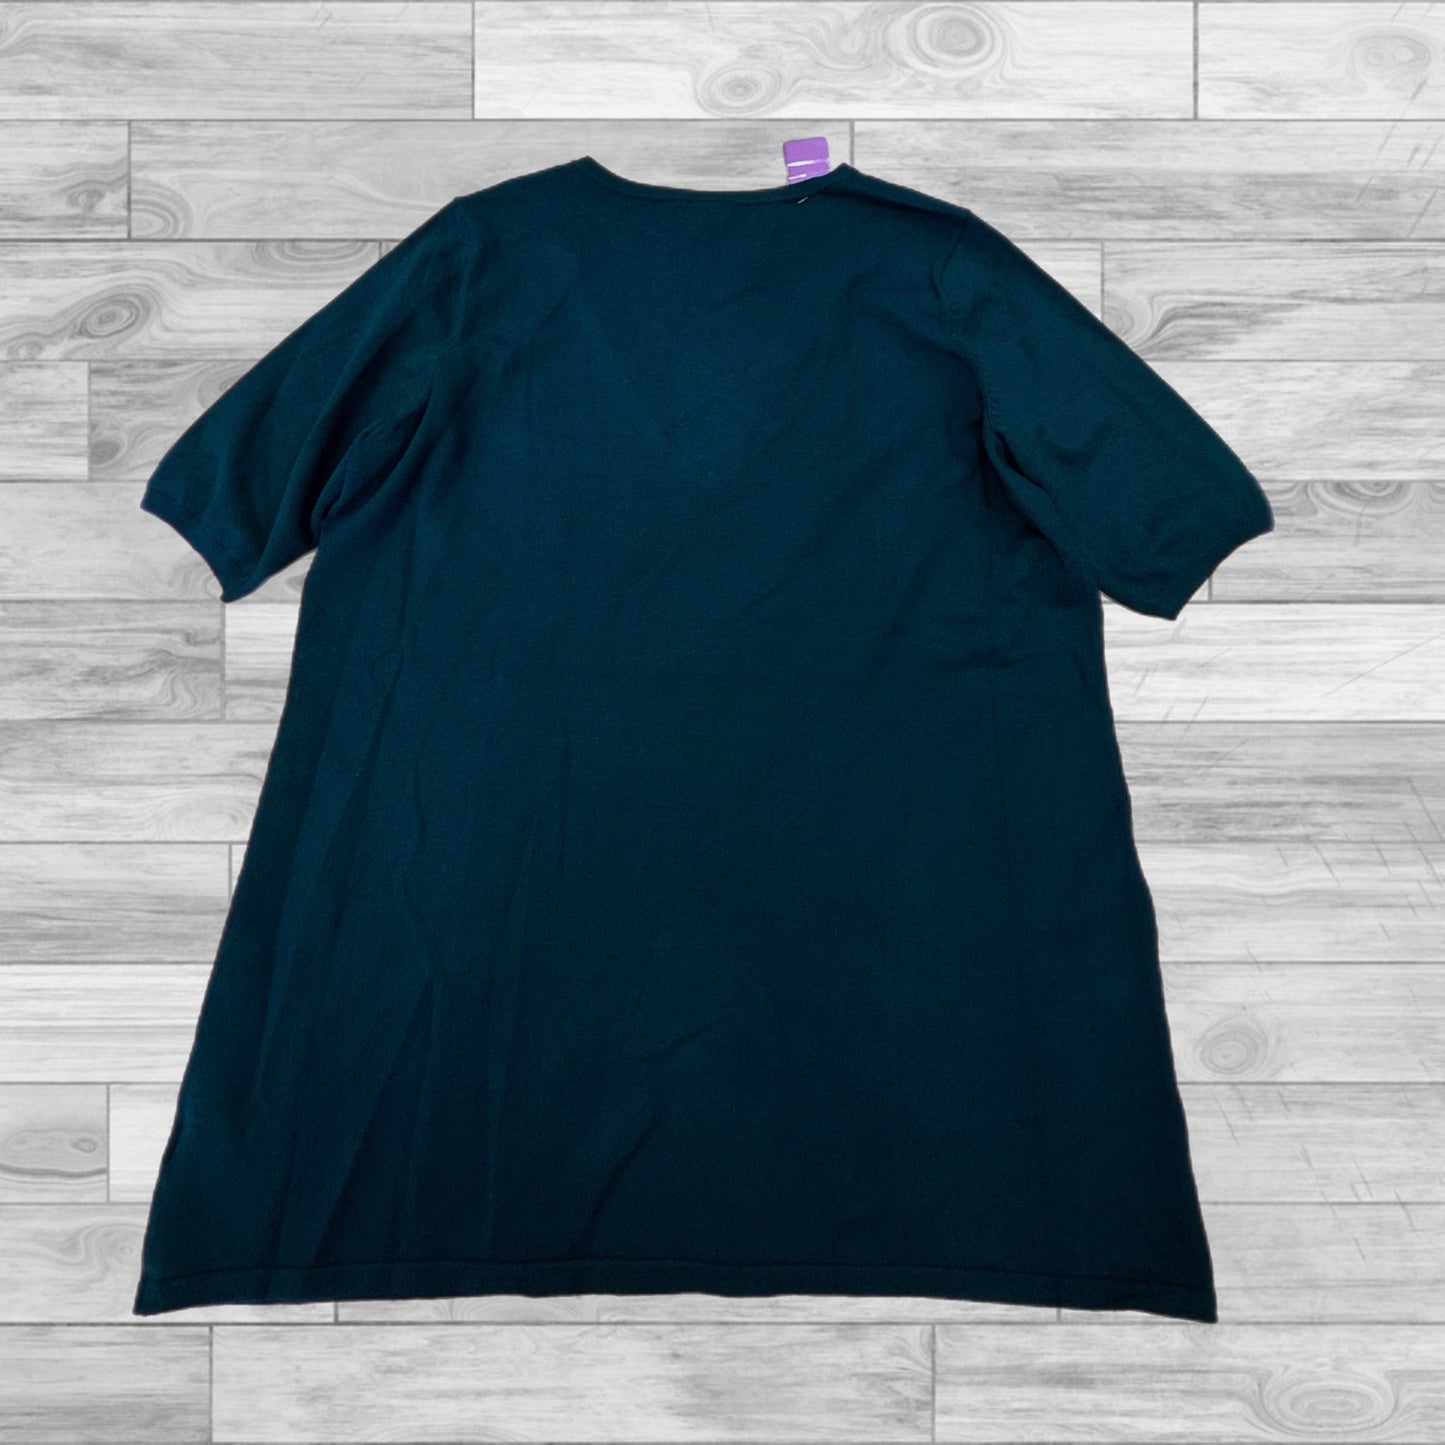 Blue Top Short Sleeve Torrid, Size 1x